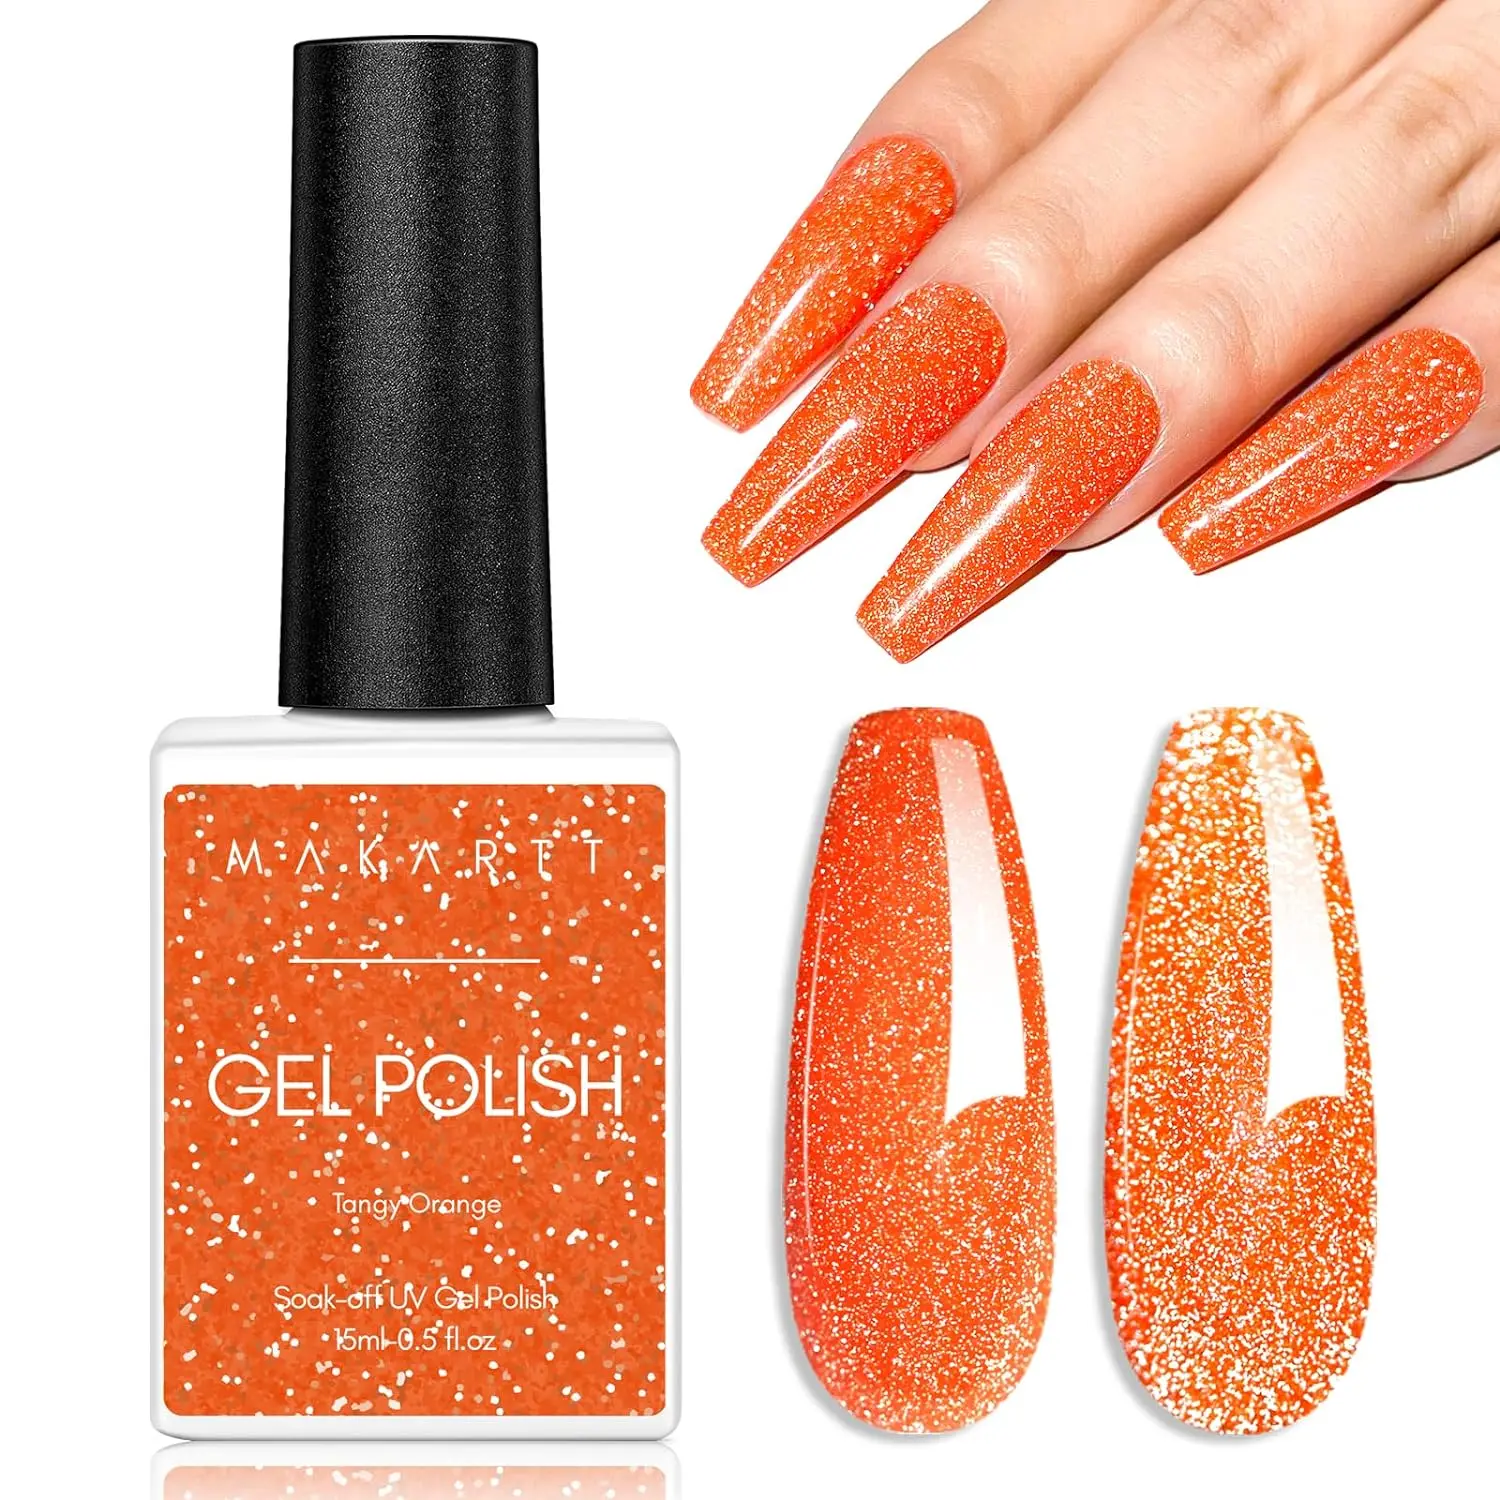 

Makartt Glitter Nail Polish Flash Diamond Orange Reflective Fall Nail Gel 15ML Soak Off UV LED Sparkly Shiny Gel Polish Manicure